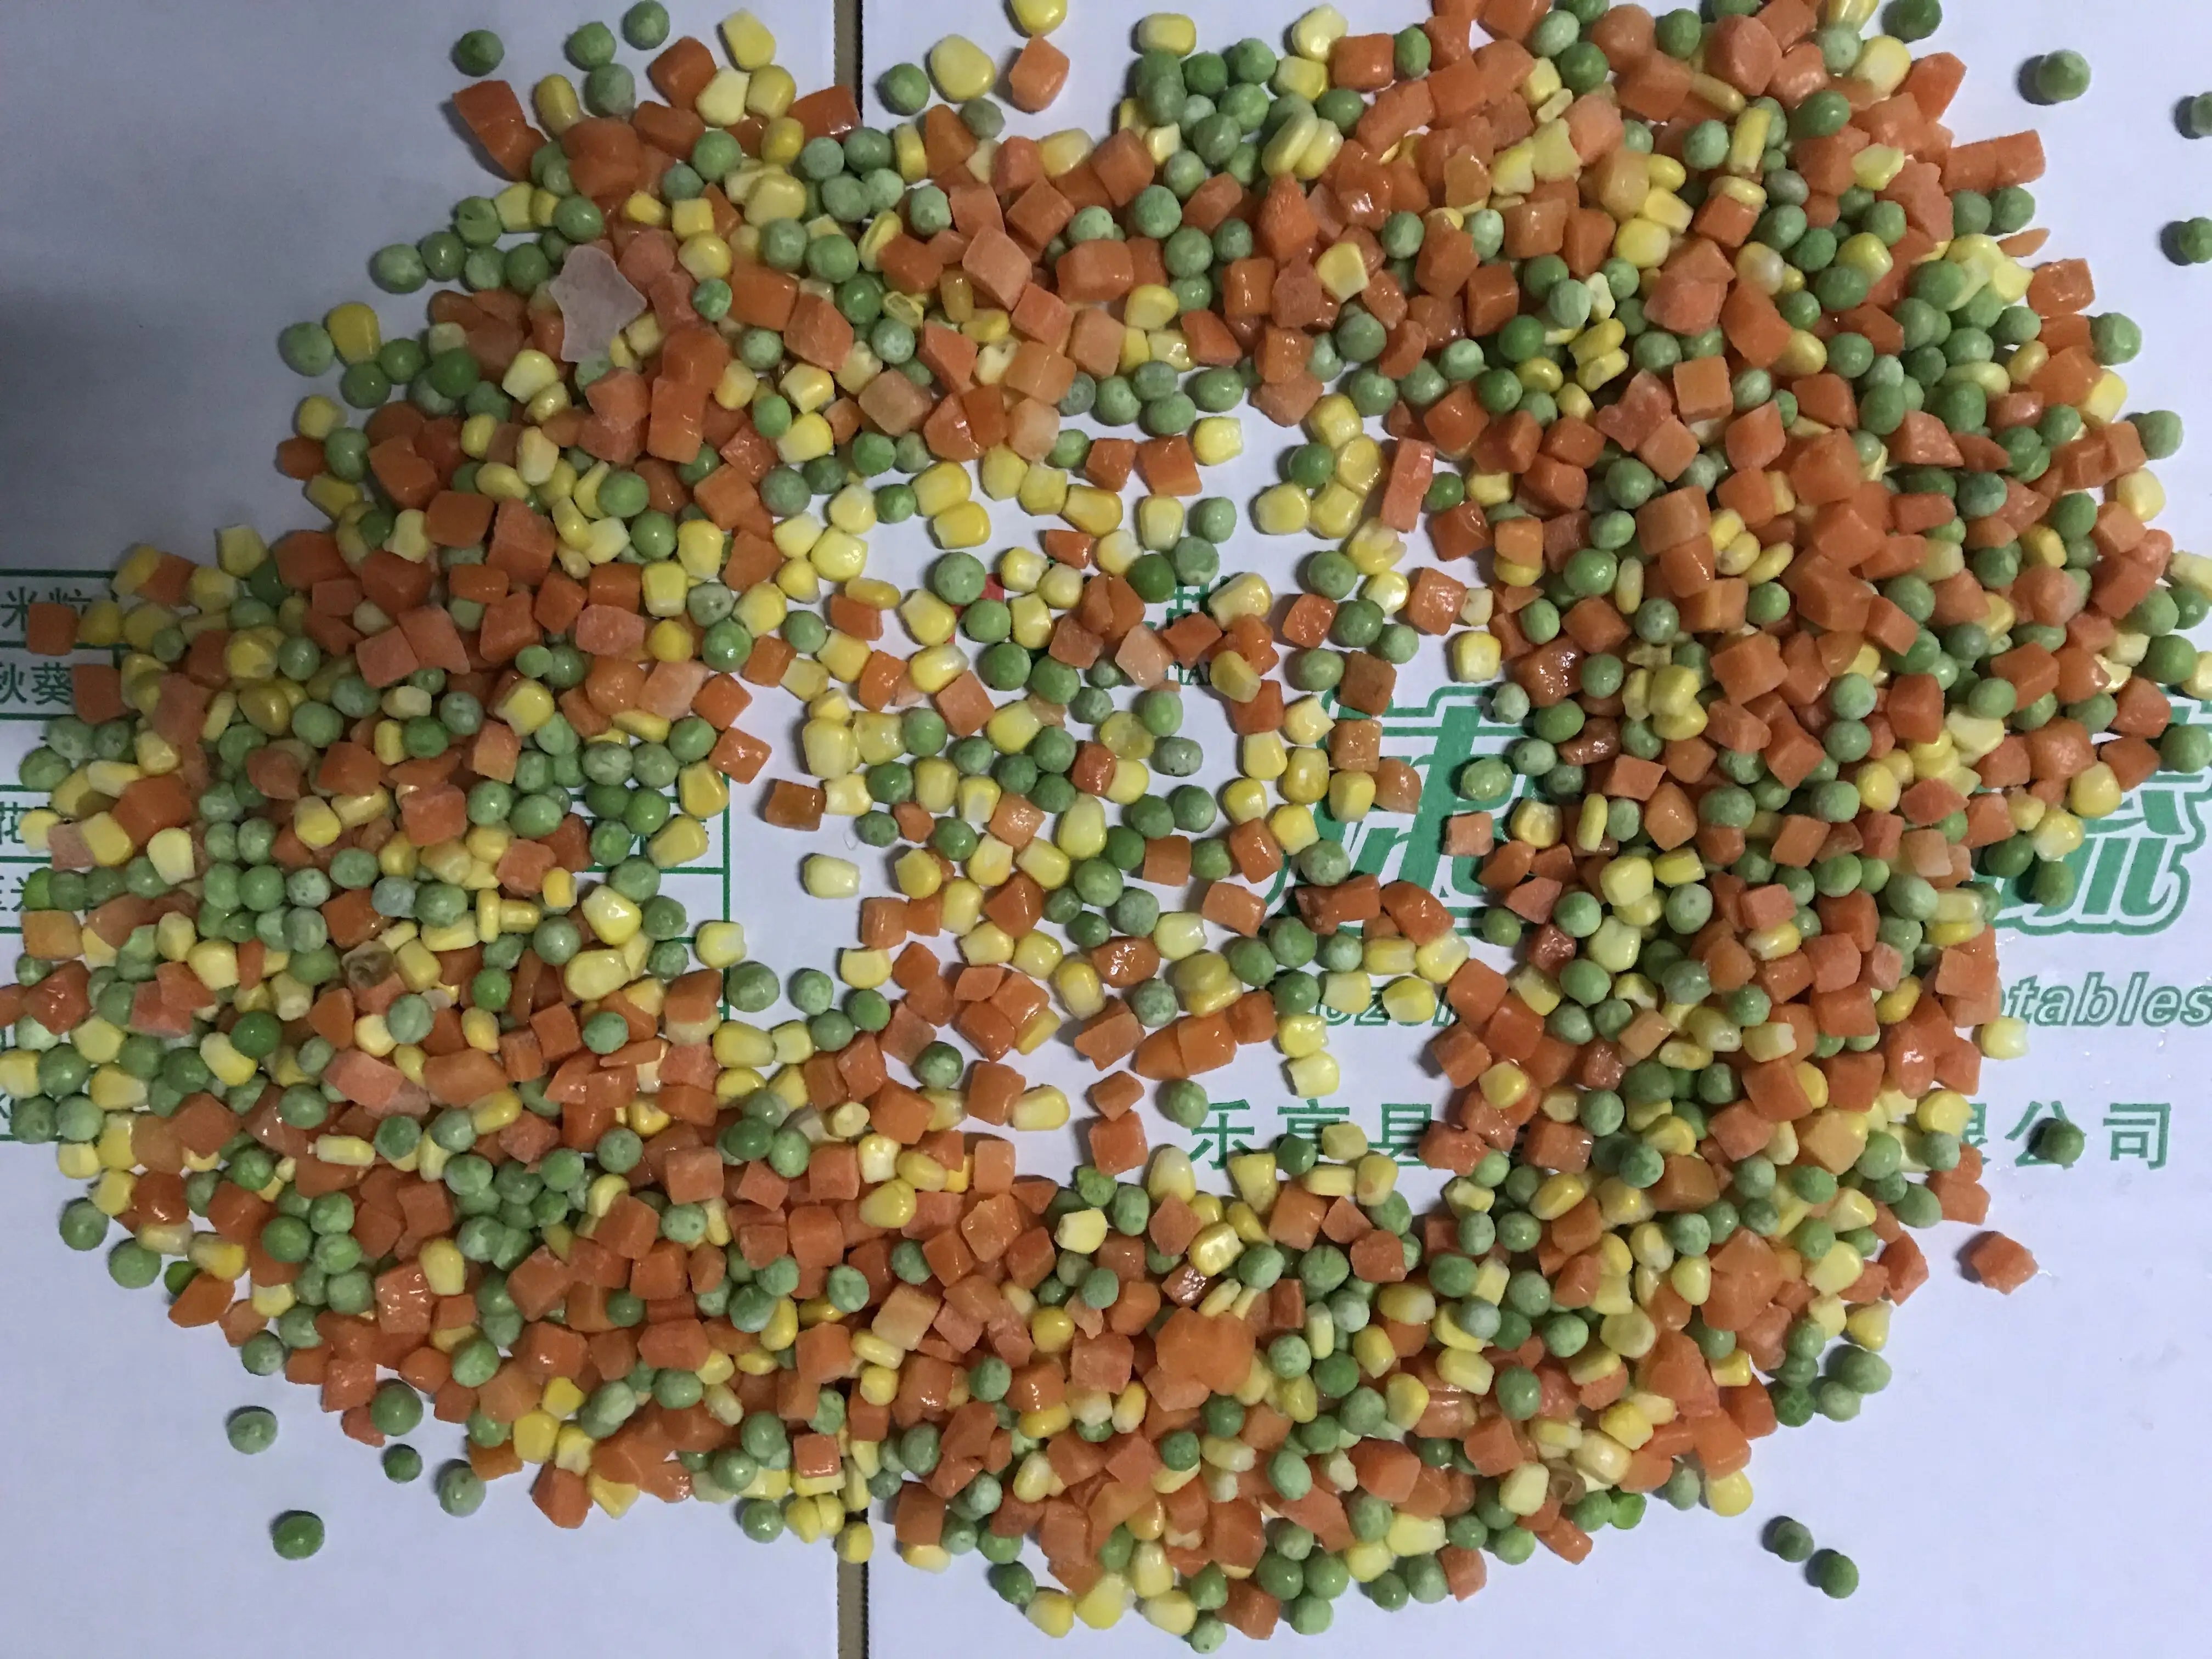 Bulk Quantity Supplier Origin Green Peas Green Beans Cut Carrots Frozen Mixed Vegetables